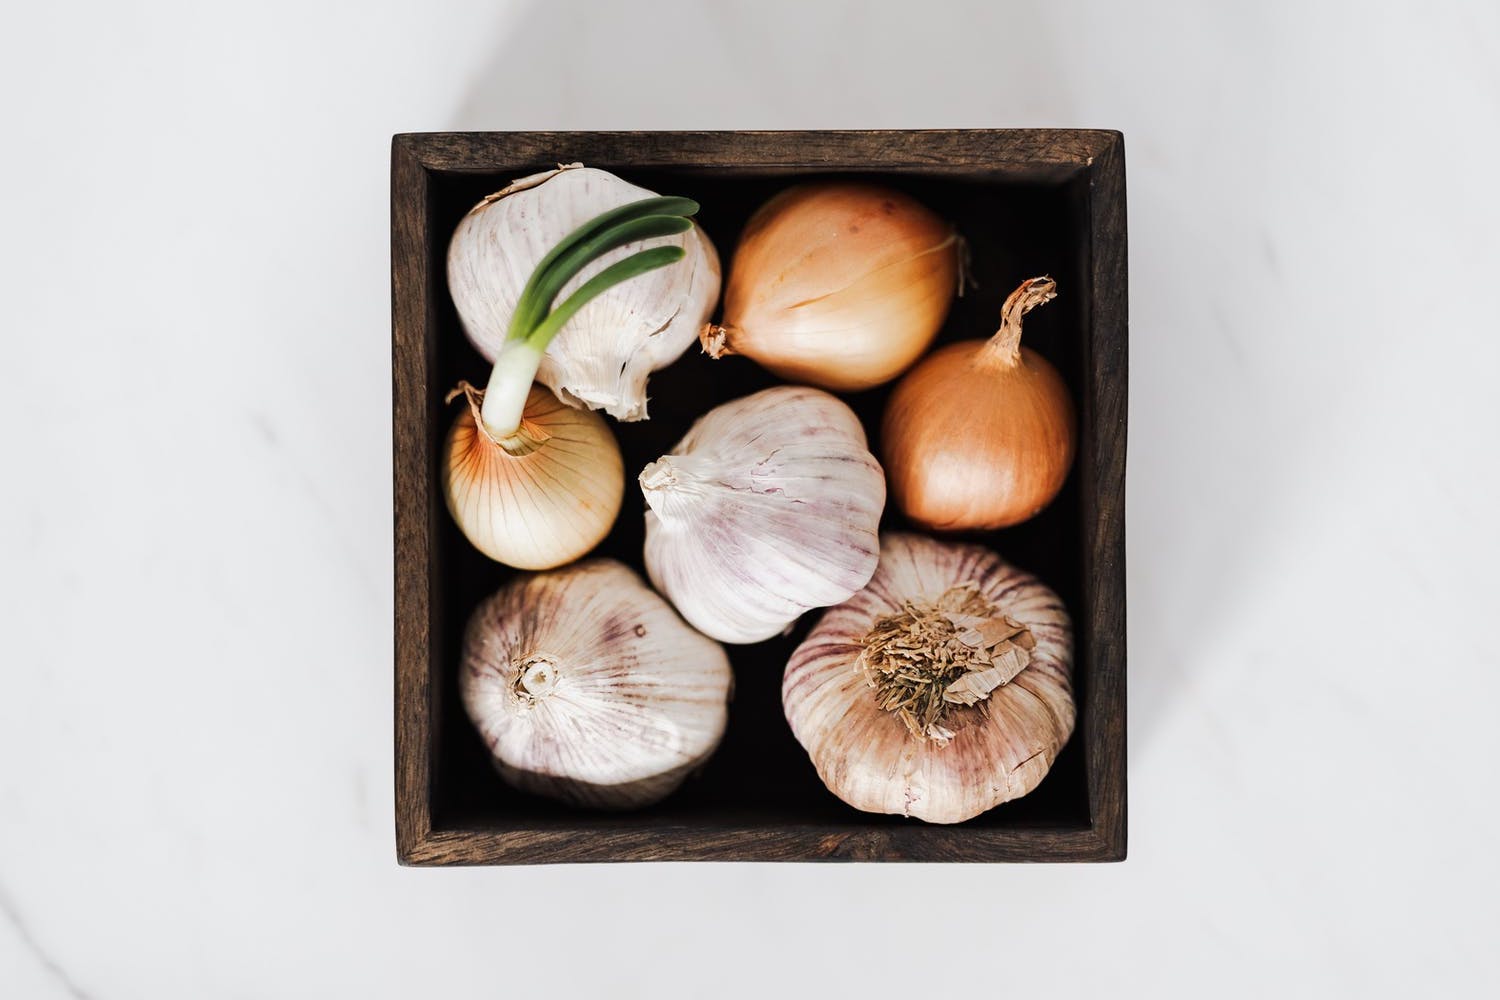 Onion Family: Basic Healing Properties